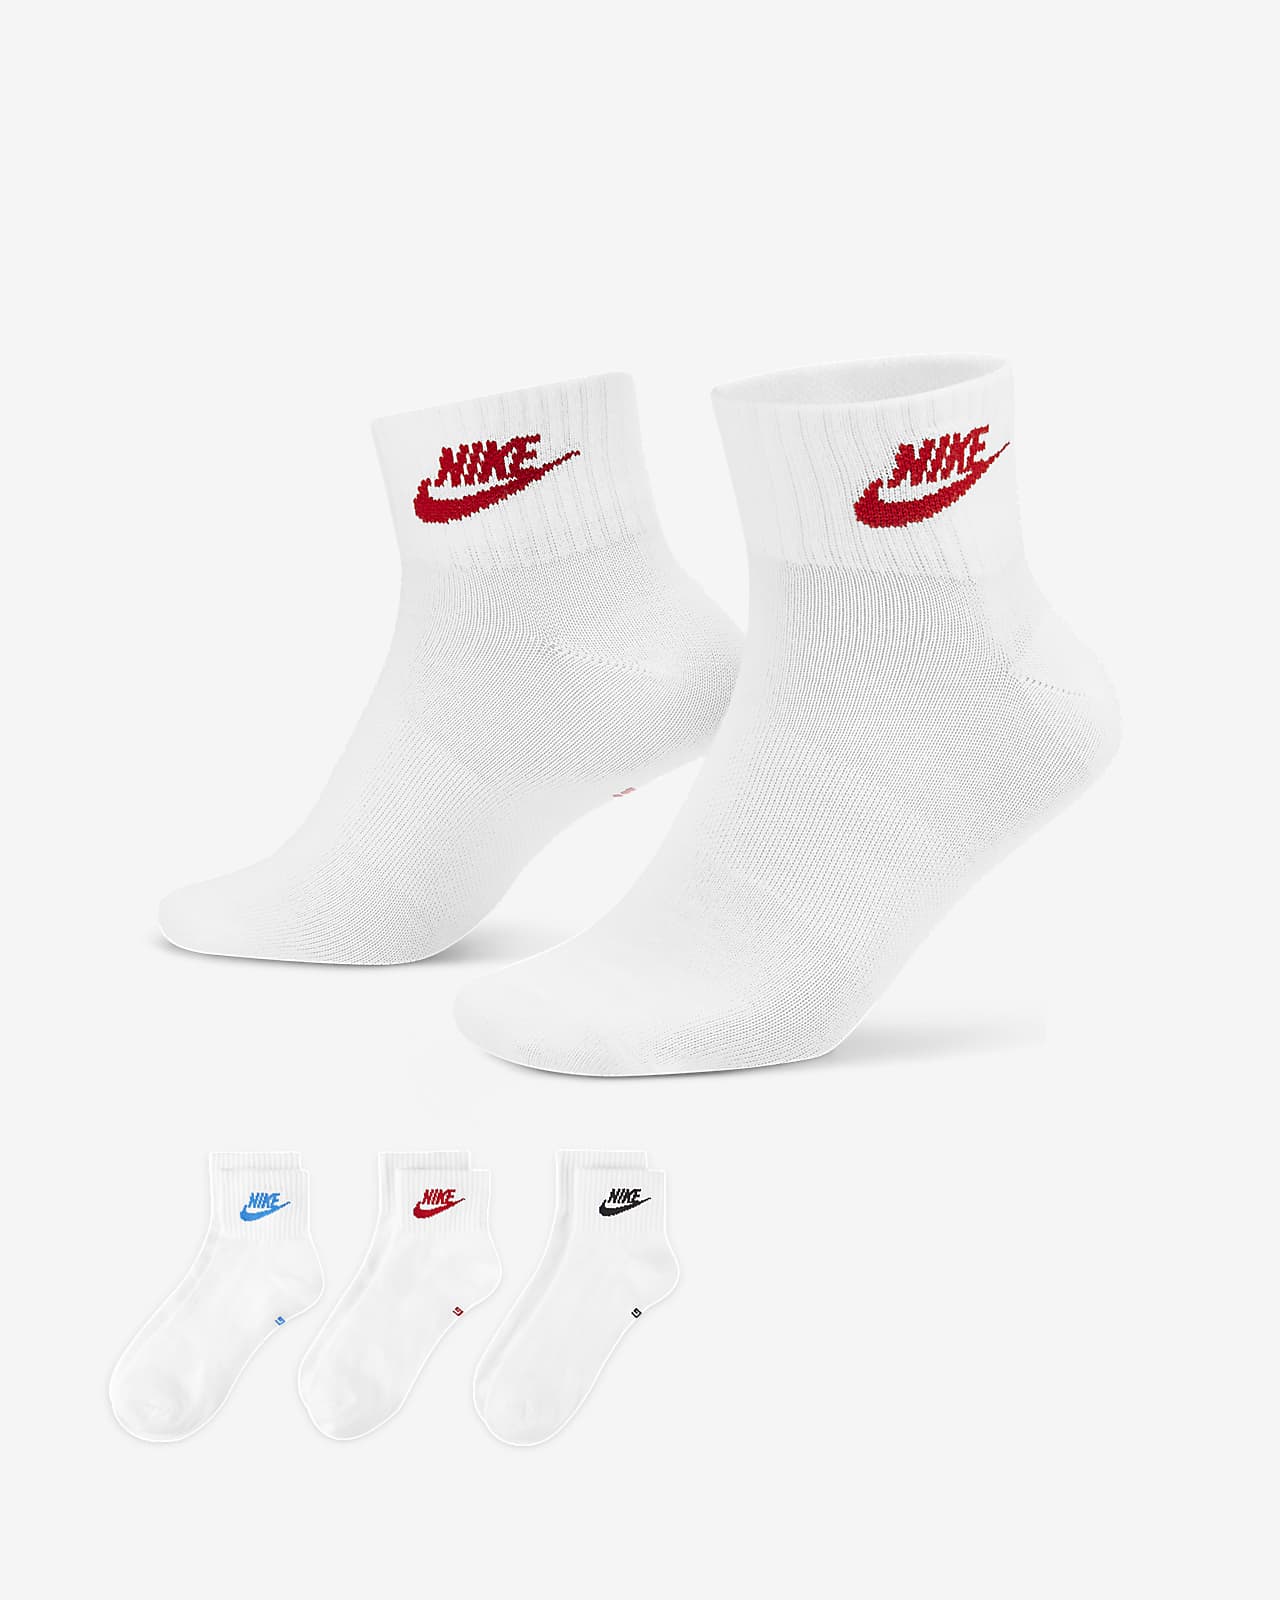 Nike Everyday Socks Pairs). Nike.com